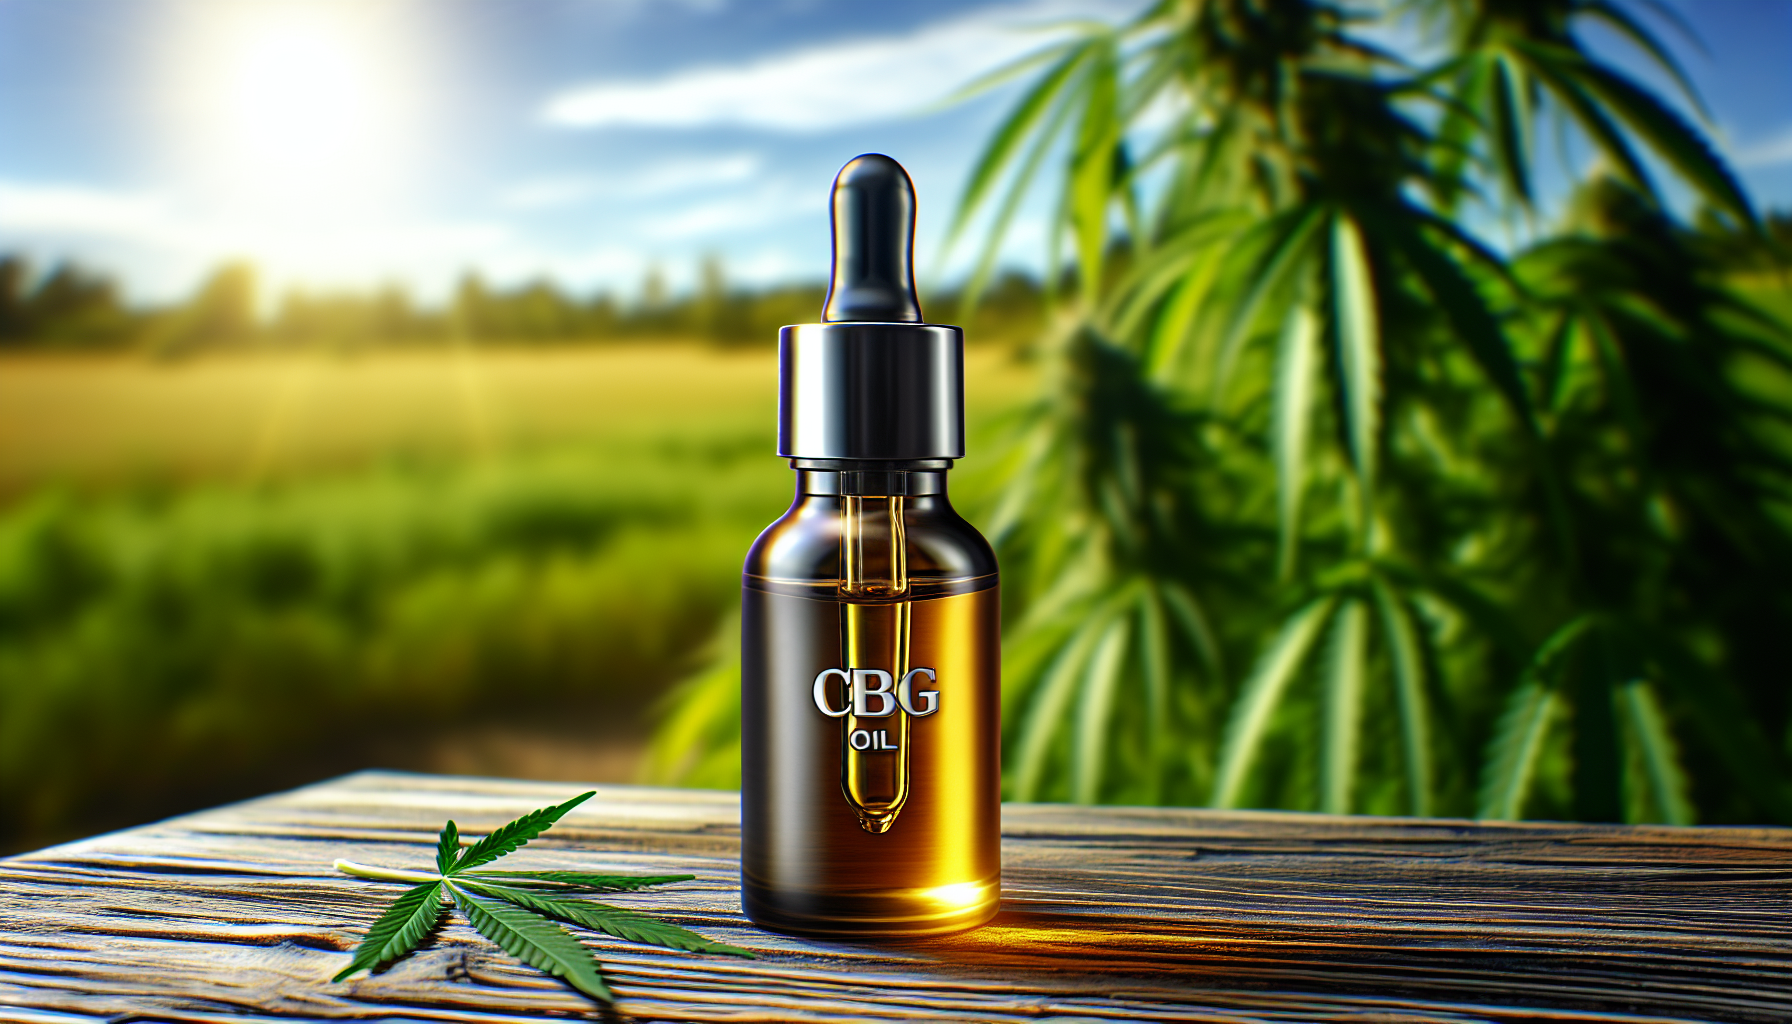 Premium CBG oil bottle with hemp plant in the background